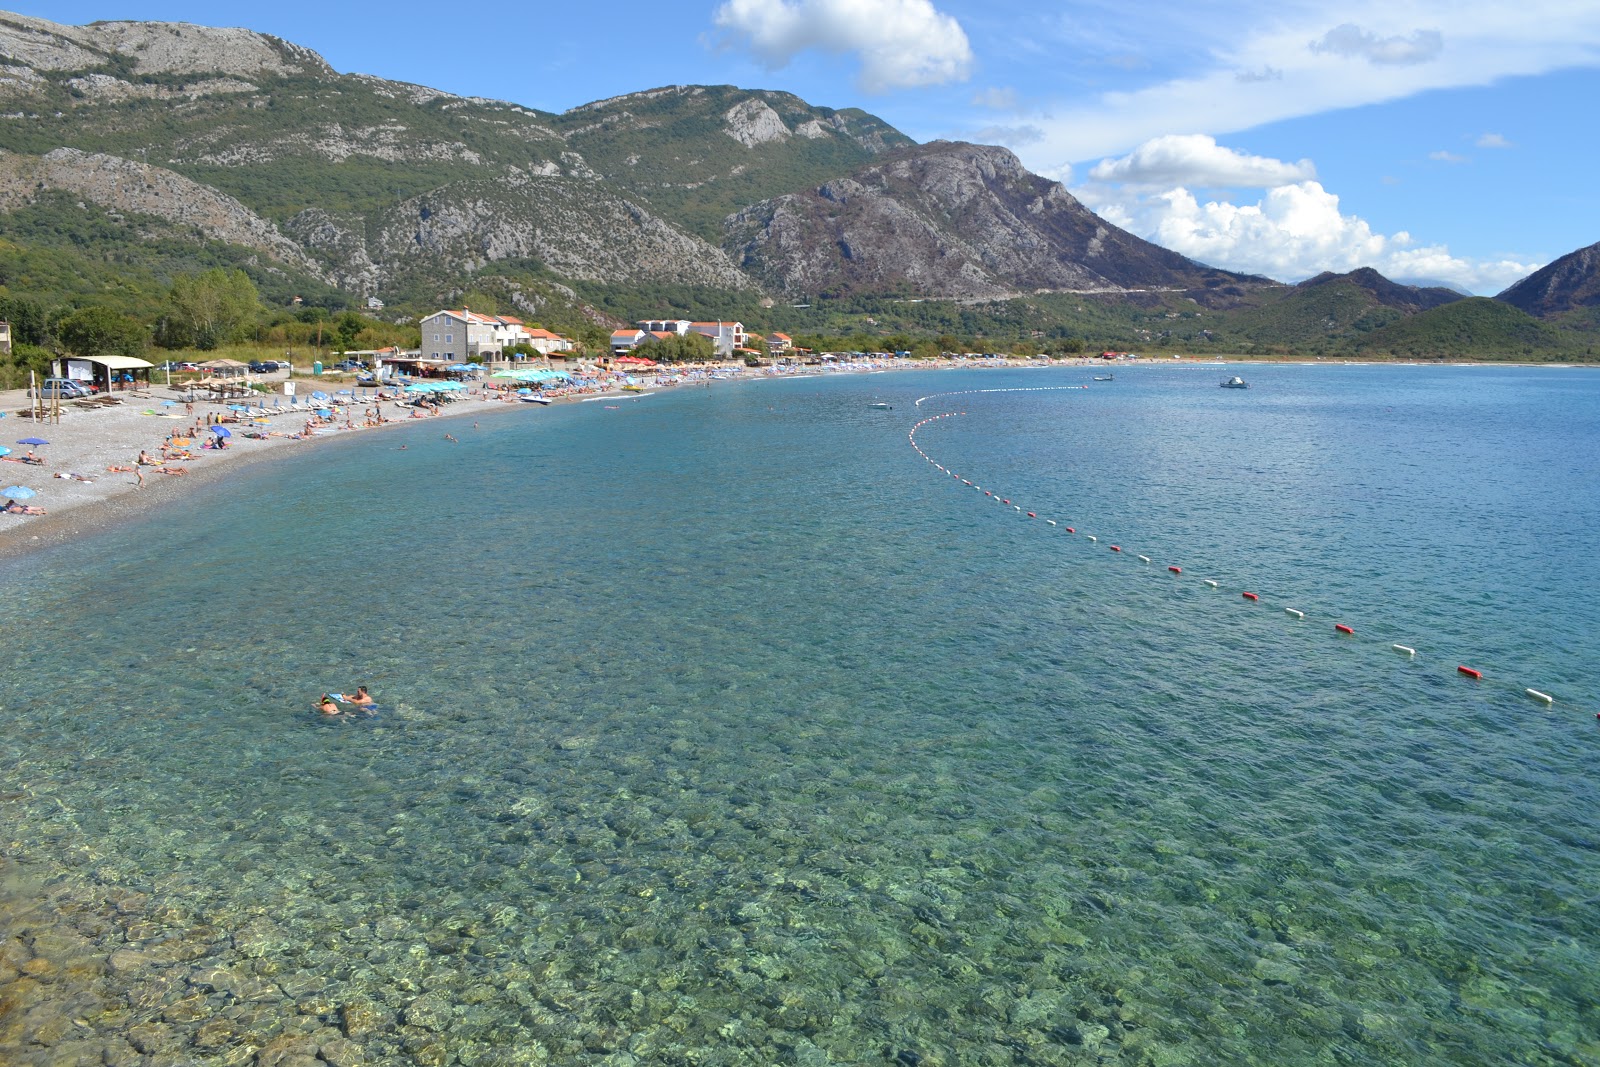 Fotografie cu Buljarica beach cu nivelul de curățenie in medie